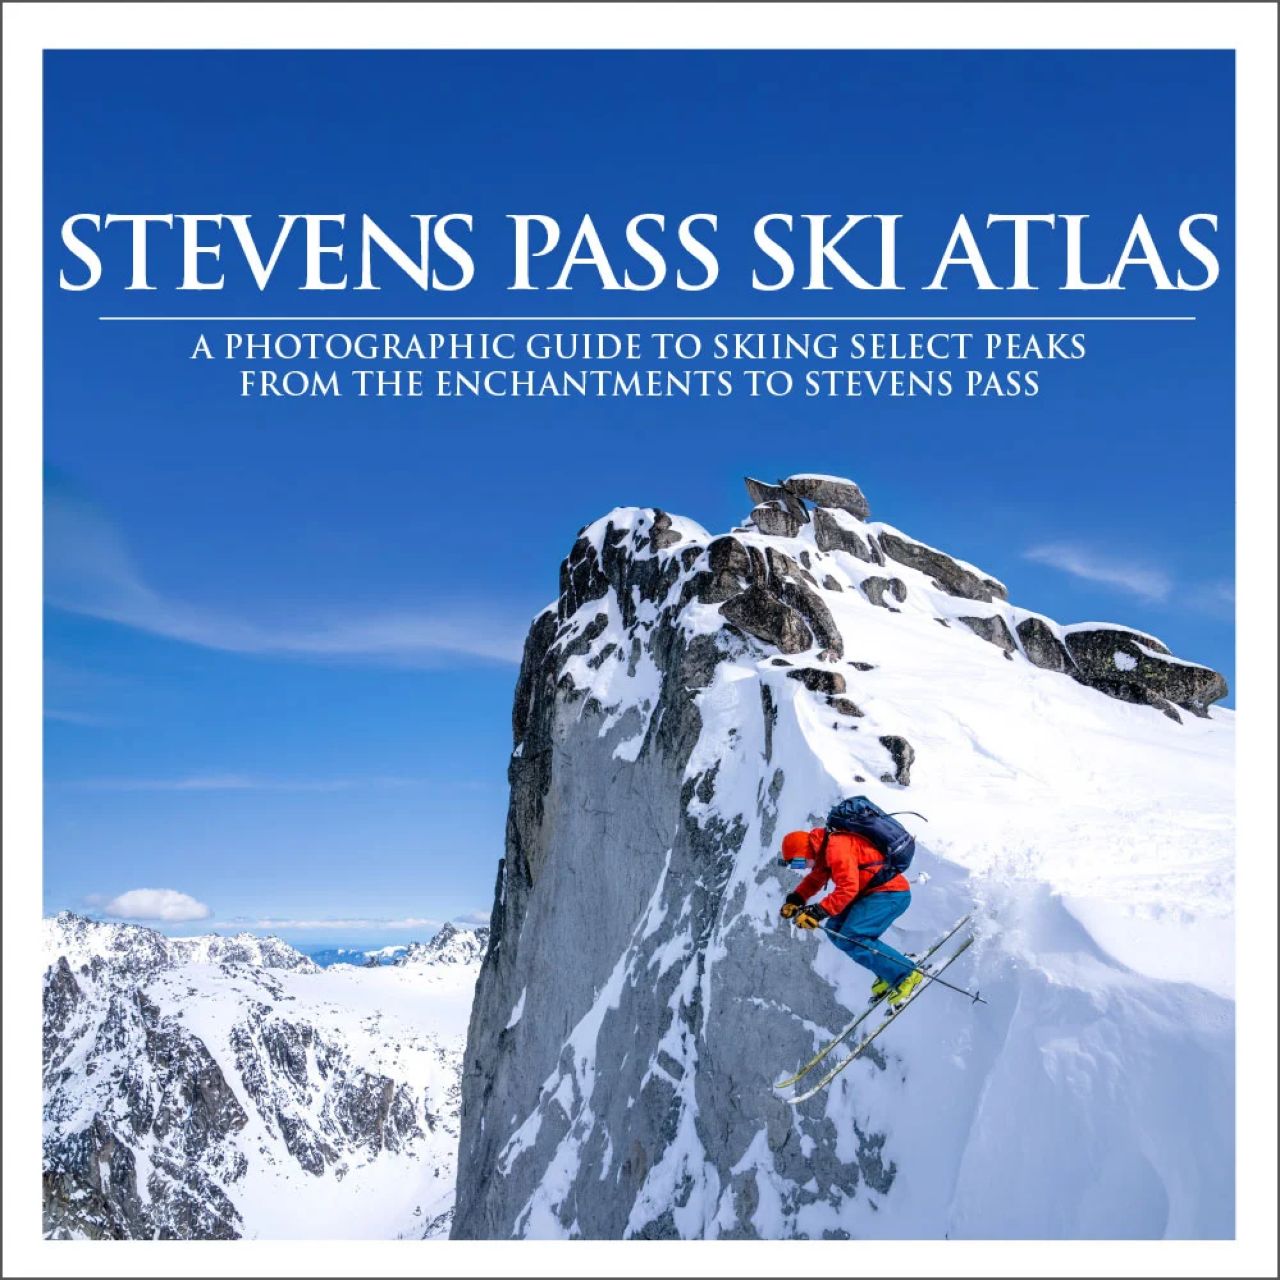 Stevens Pass Ski Atlas by Alpenglow Publishing Studio